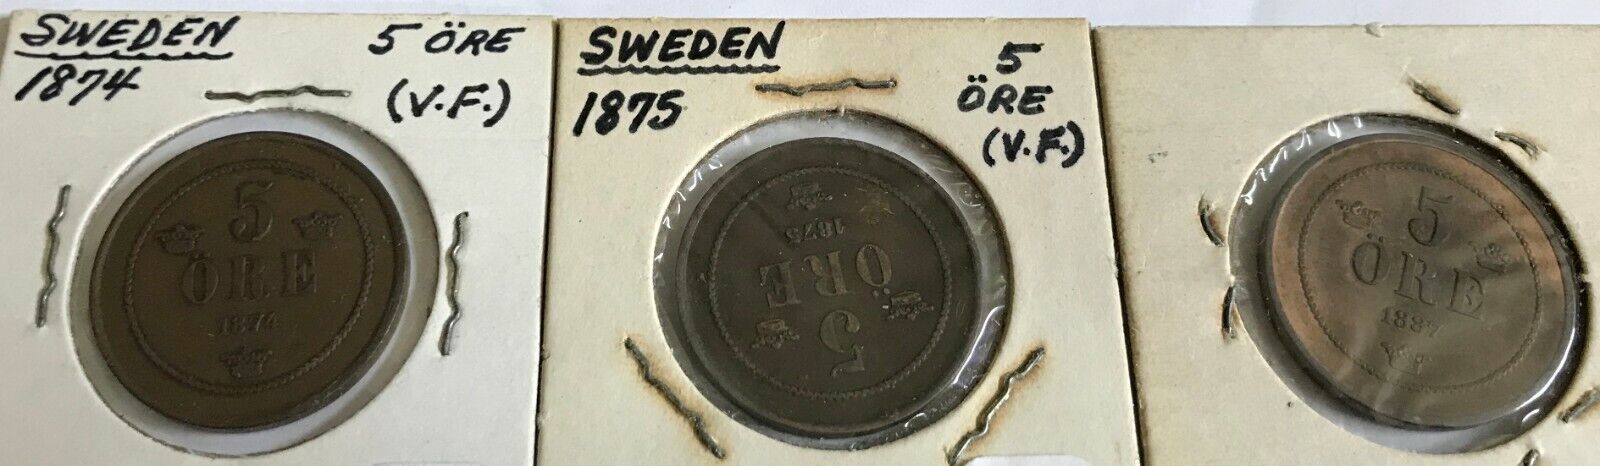 Sweden - lot of 3 coins - 5 ore - 1874 VF, 1875 VF, 1887 EF - KM 736 Без бренда - фотография #4